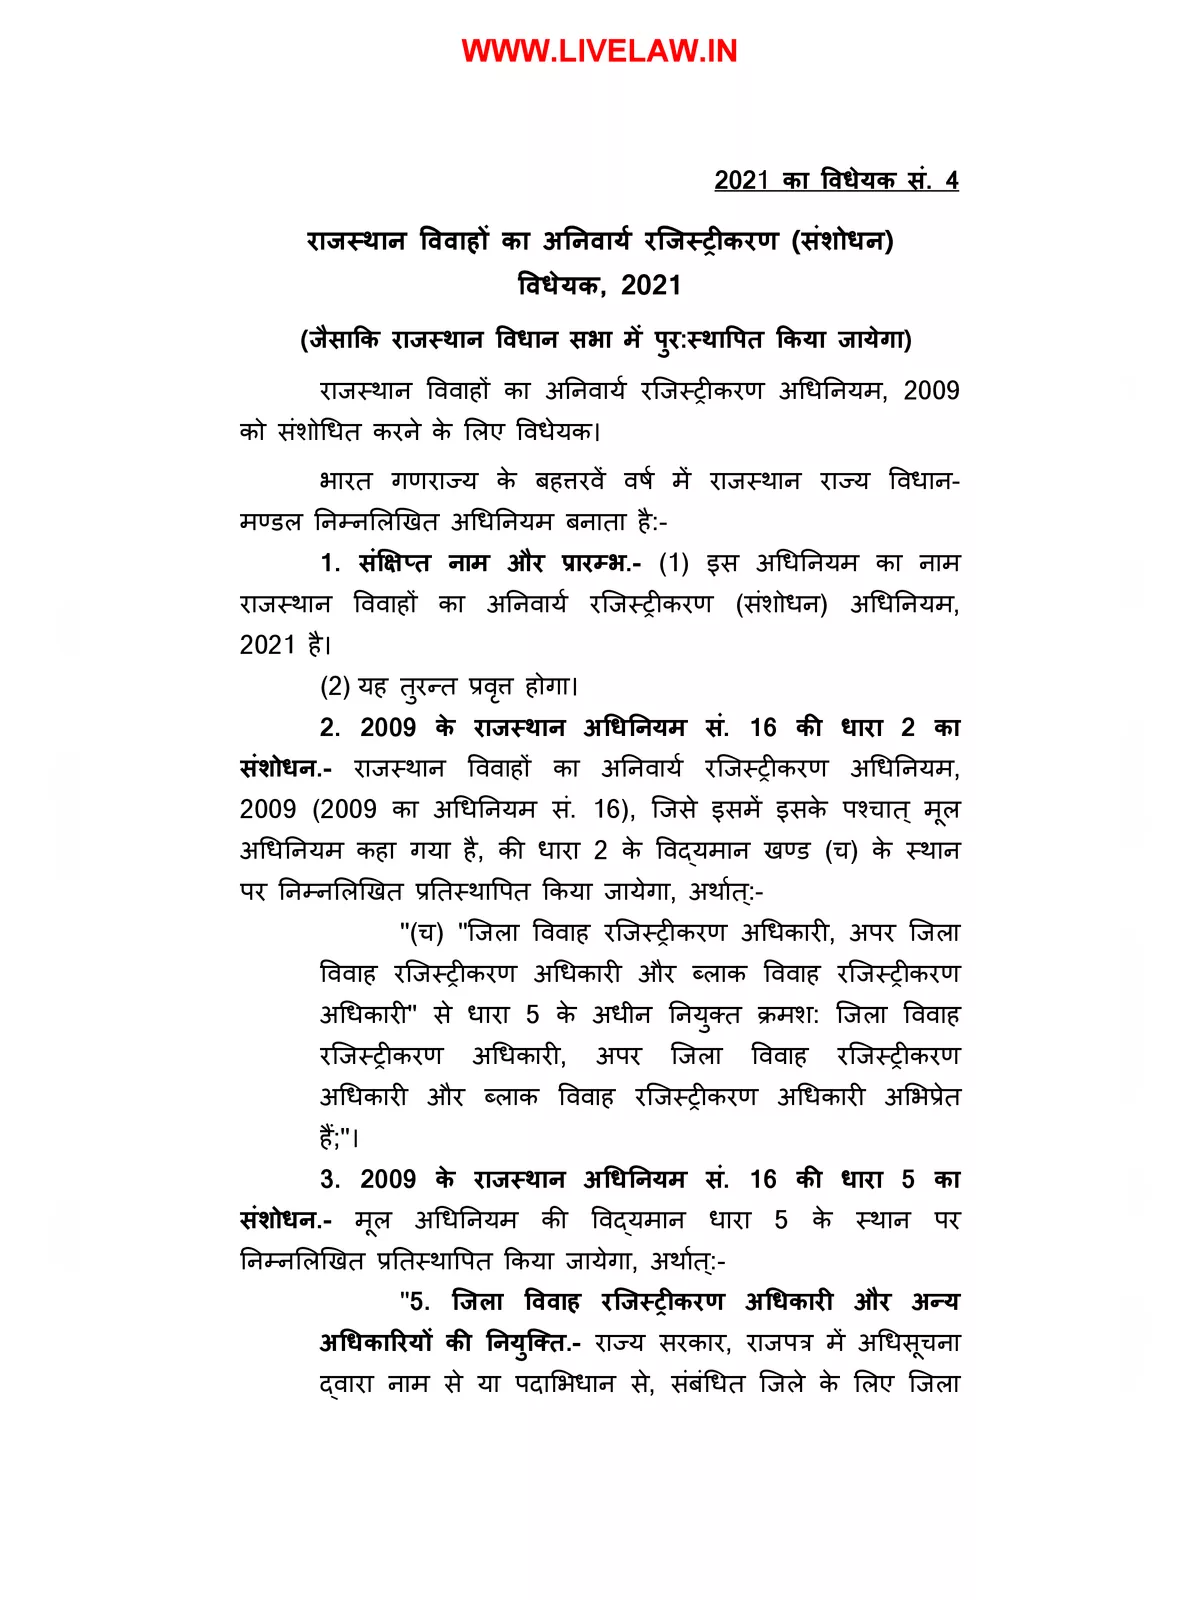 Rajasthan Compulsory Registration of Marriages (Amendment) Bill, 2021